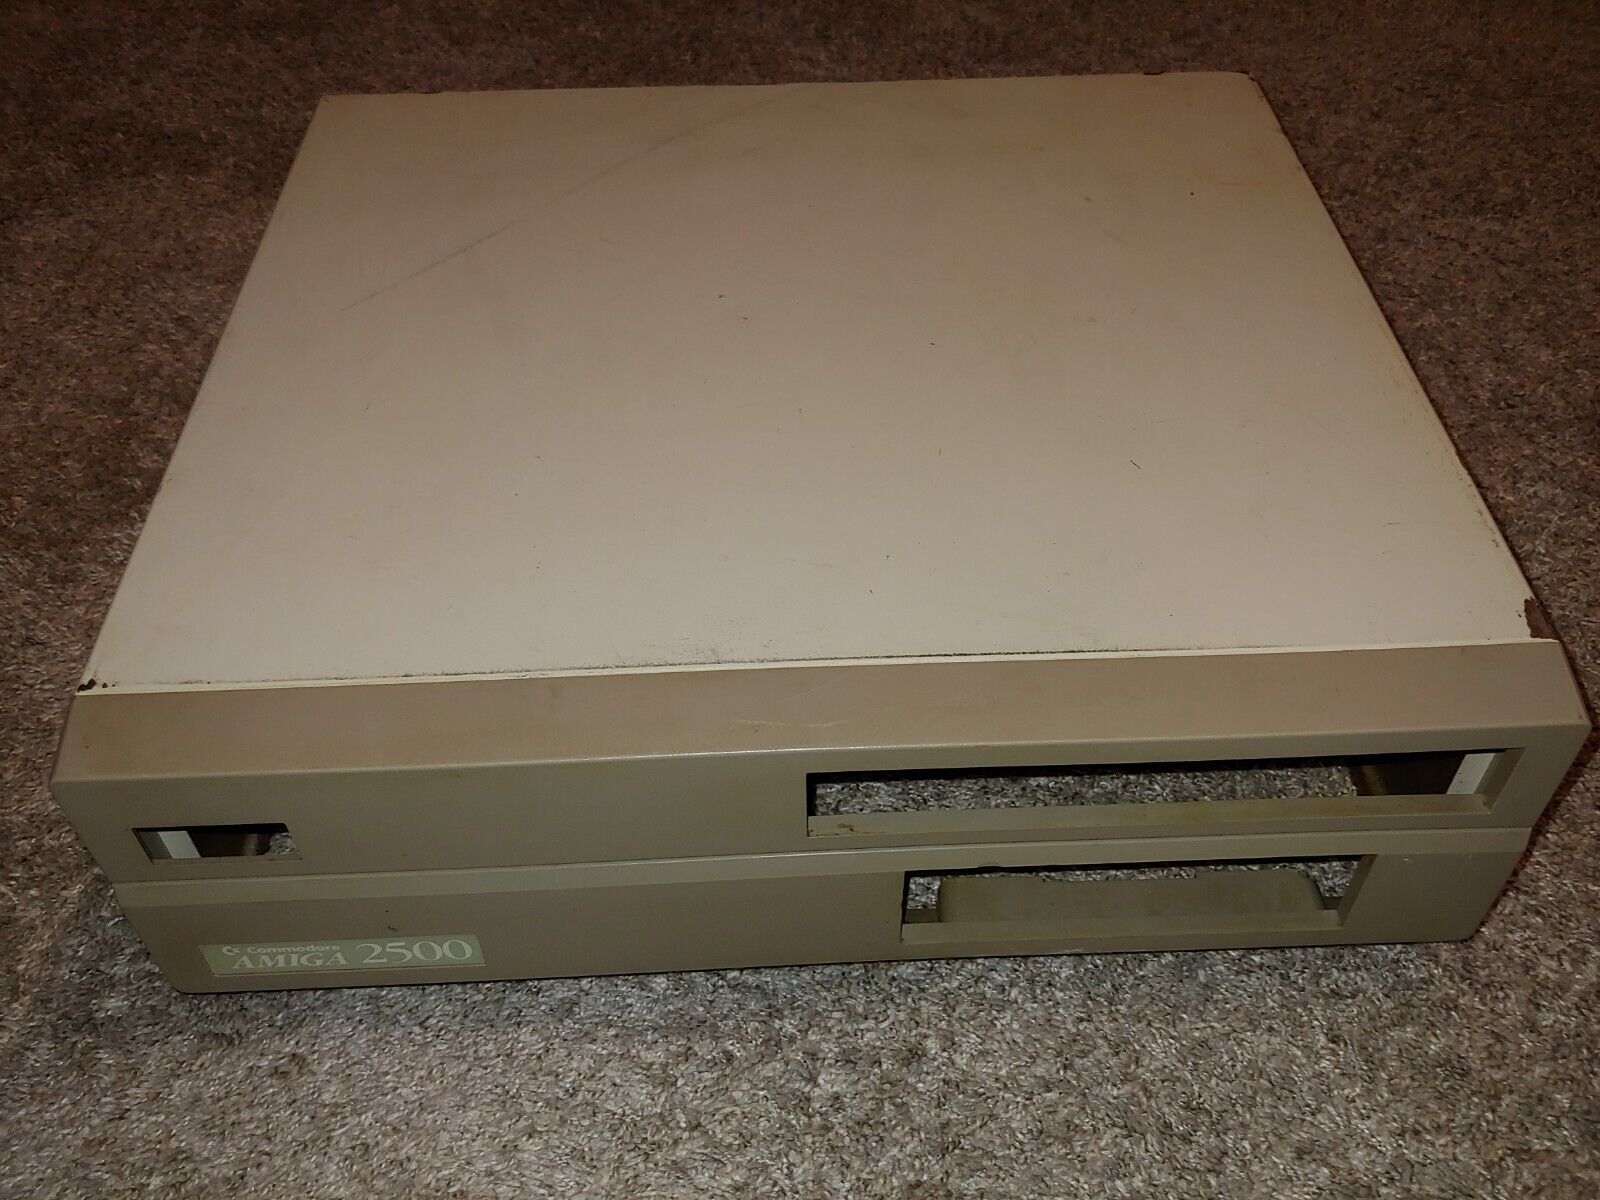 Commodore Amiga 2500 Top Case ONLY 